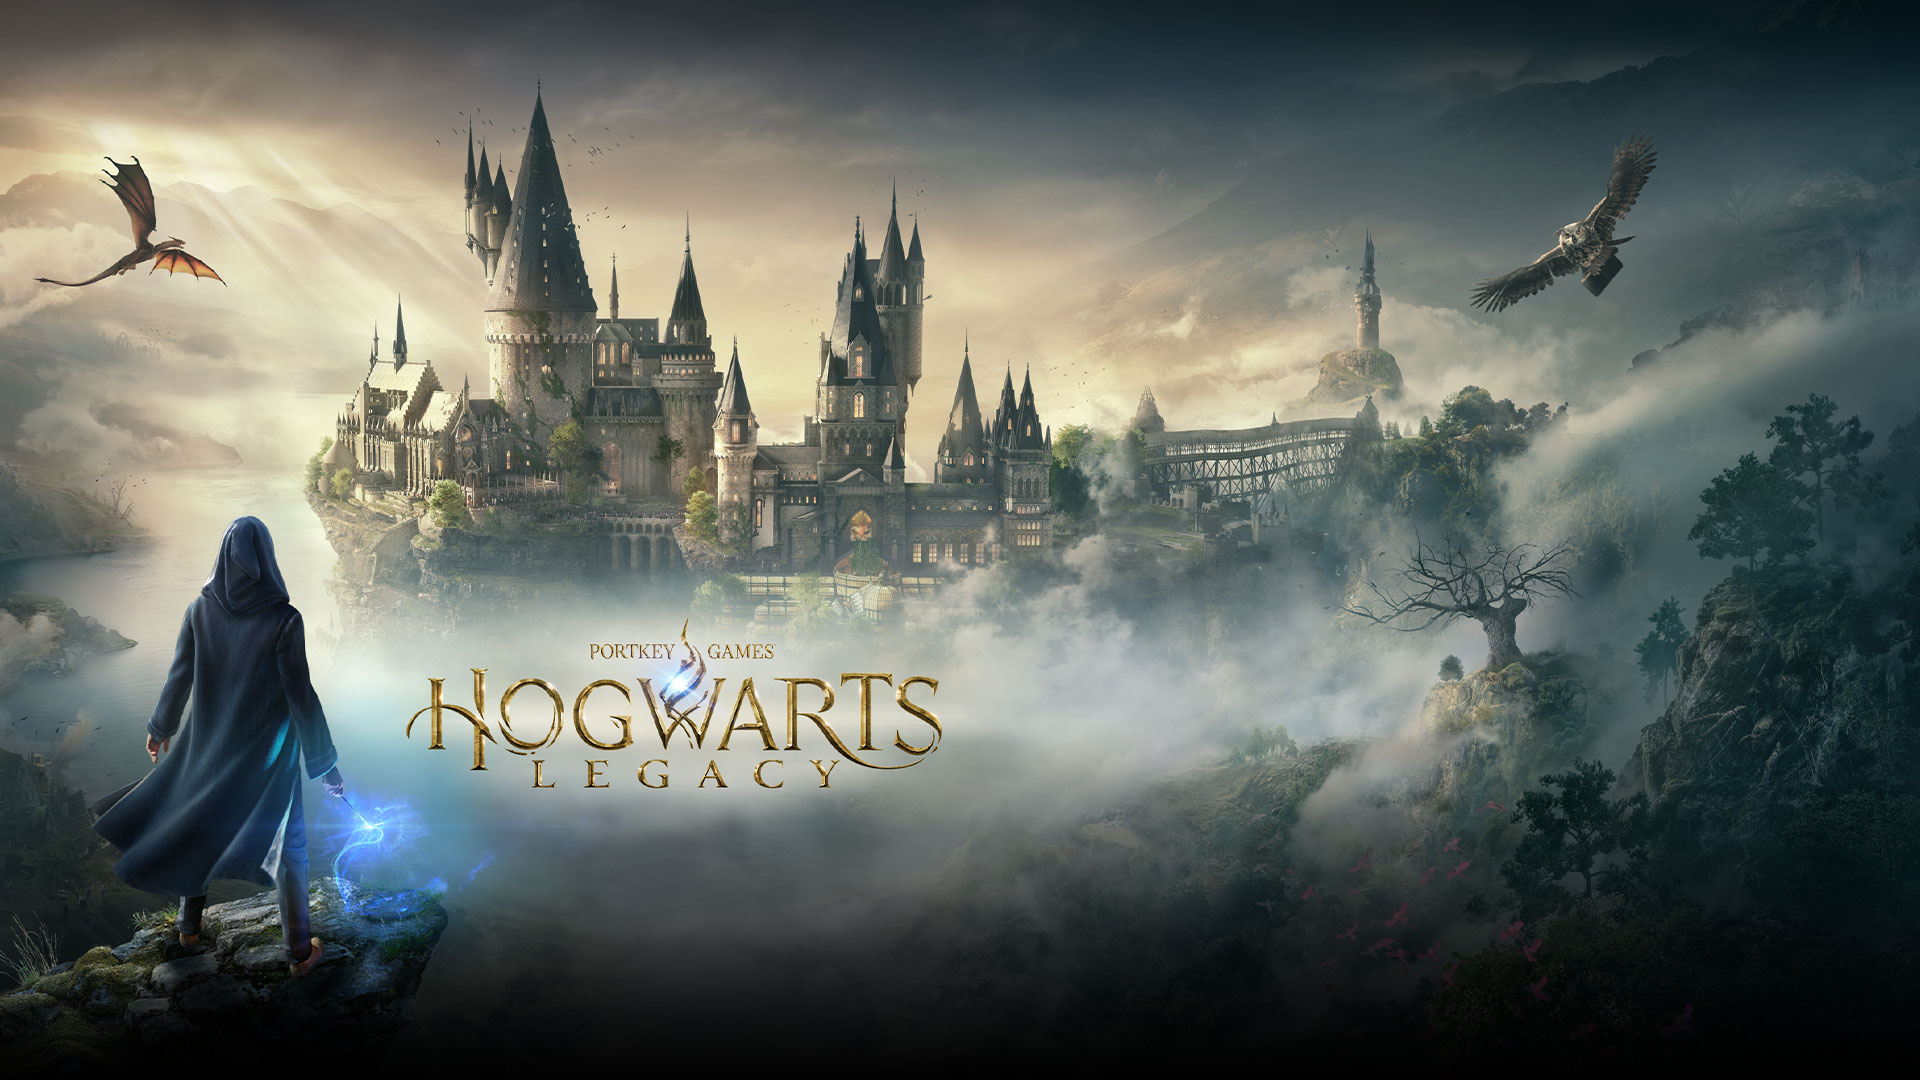 Get Ready, Potterheads - For an Open World Adventure of Hogwarts Legacy